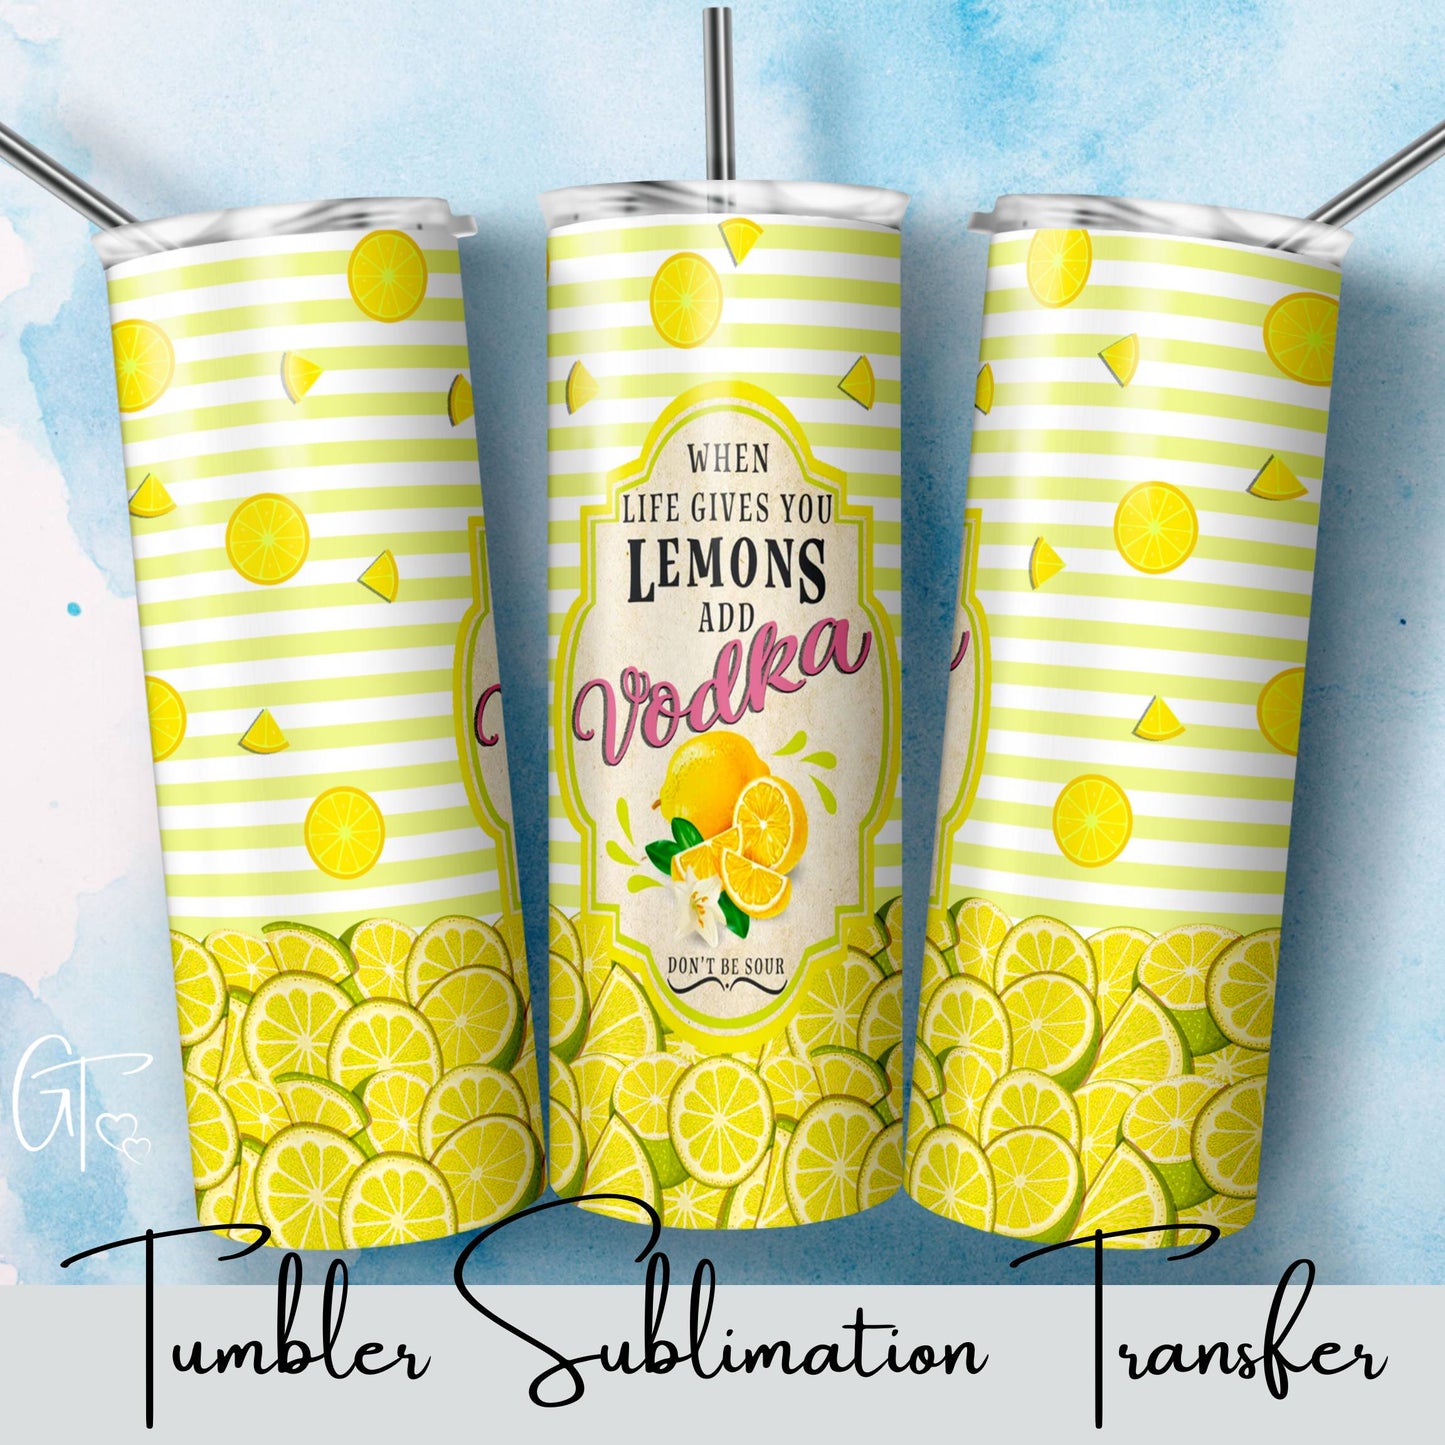 SUB1564 When life gives you Lemons add Vodka Tumbler Sublimation Transfer